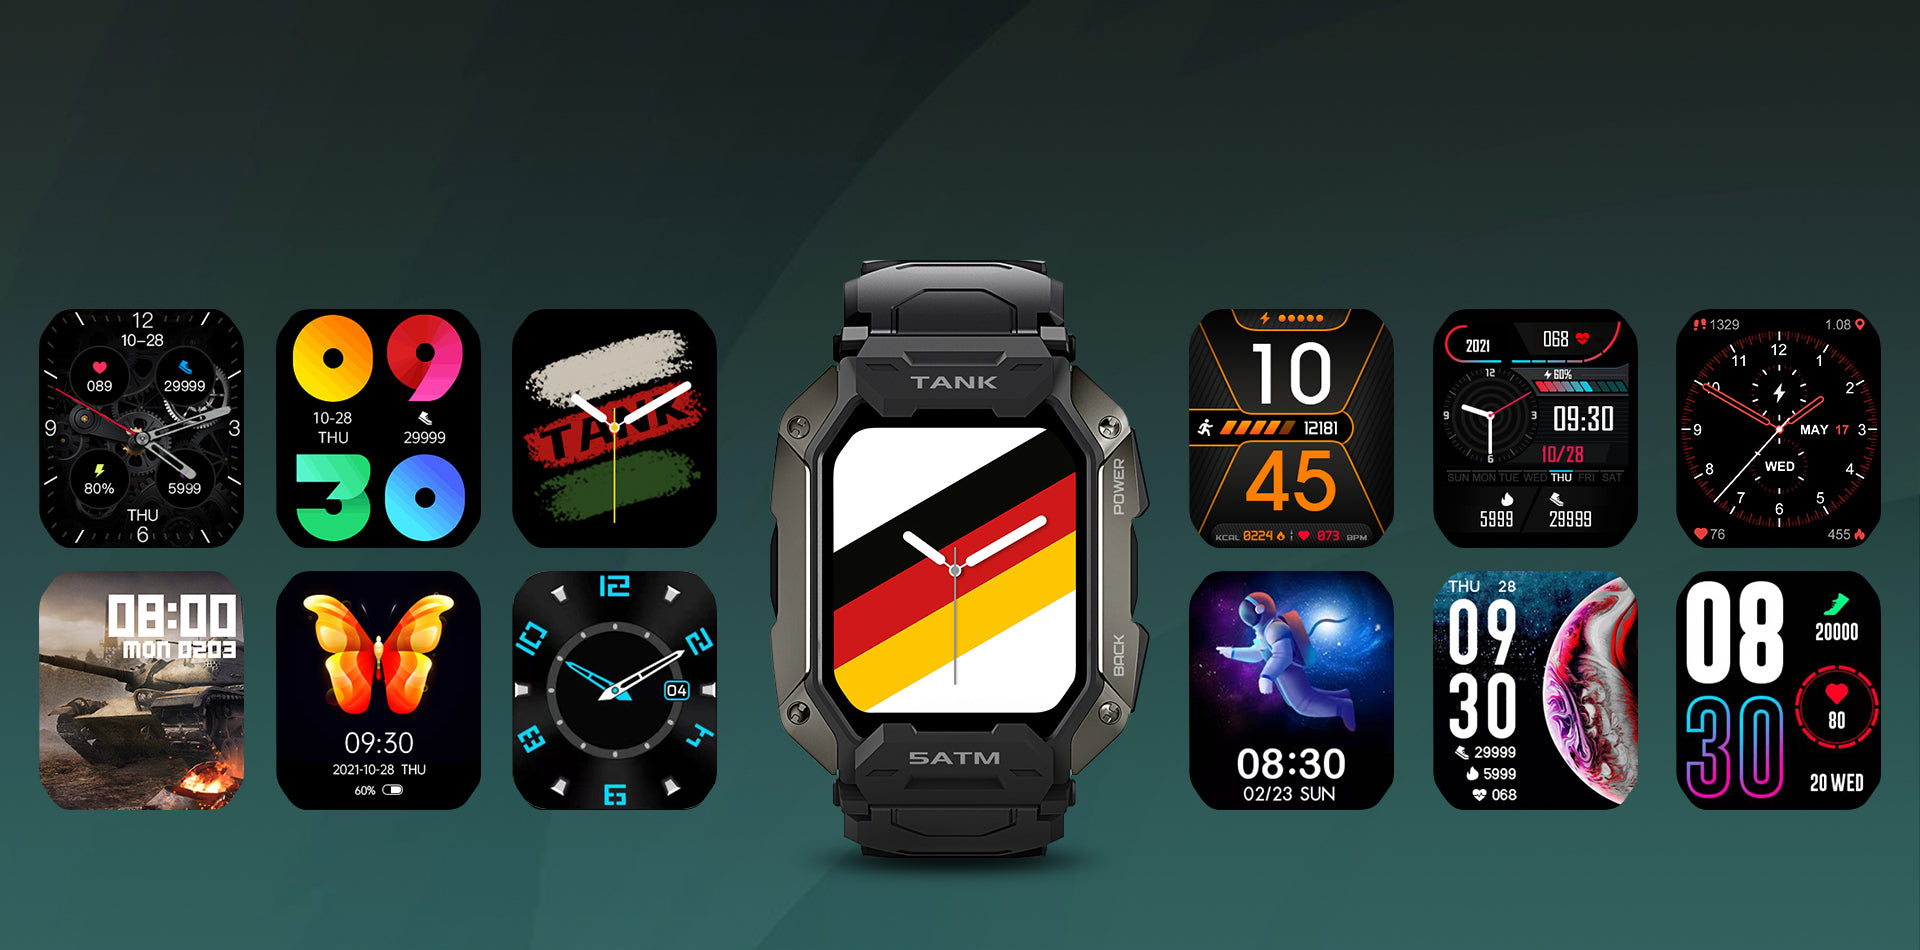 KOSPET TANK M1 Rugged Smartwatch customer-oriented watch faces